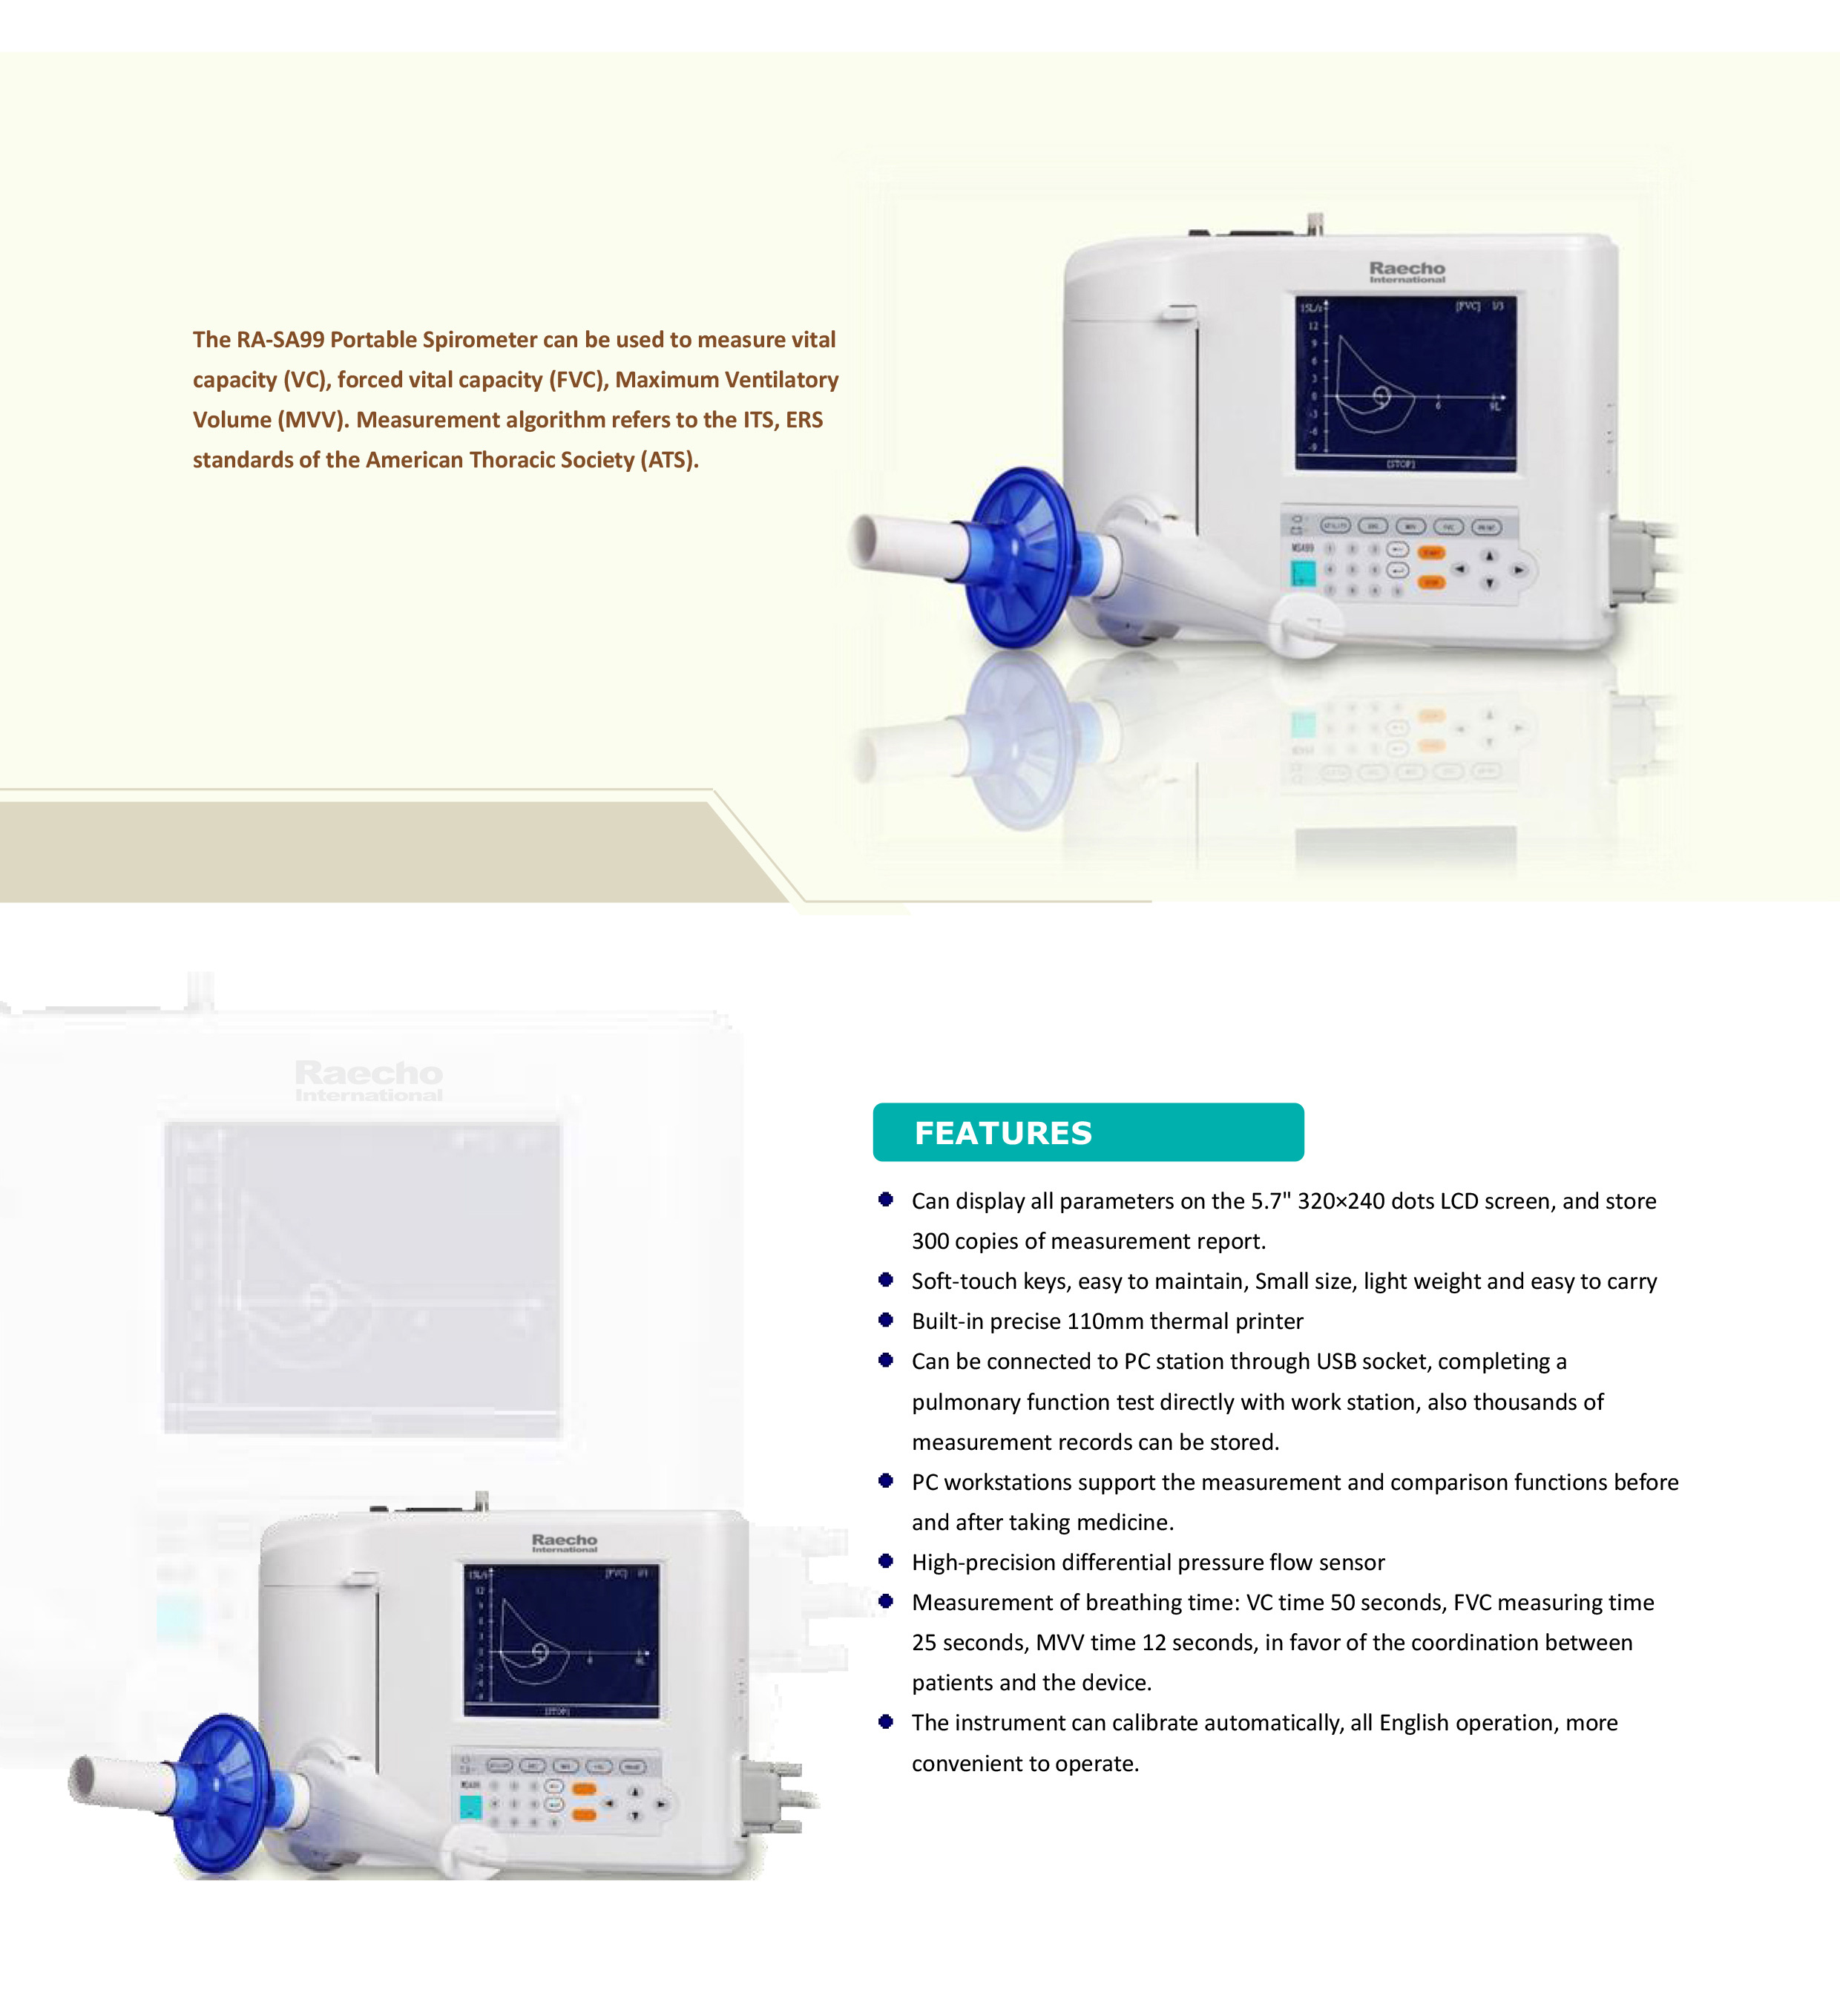 Raecho-Portable-Spirometer-1.jpg